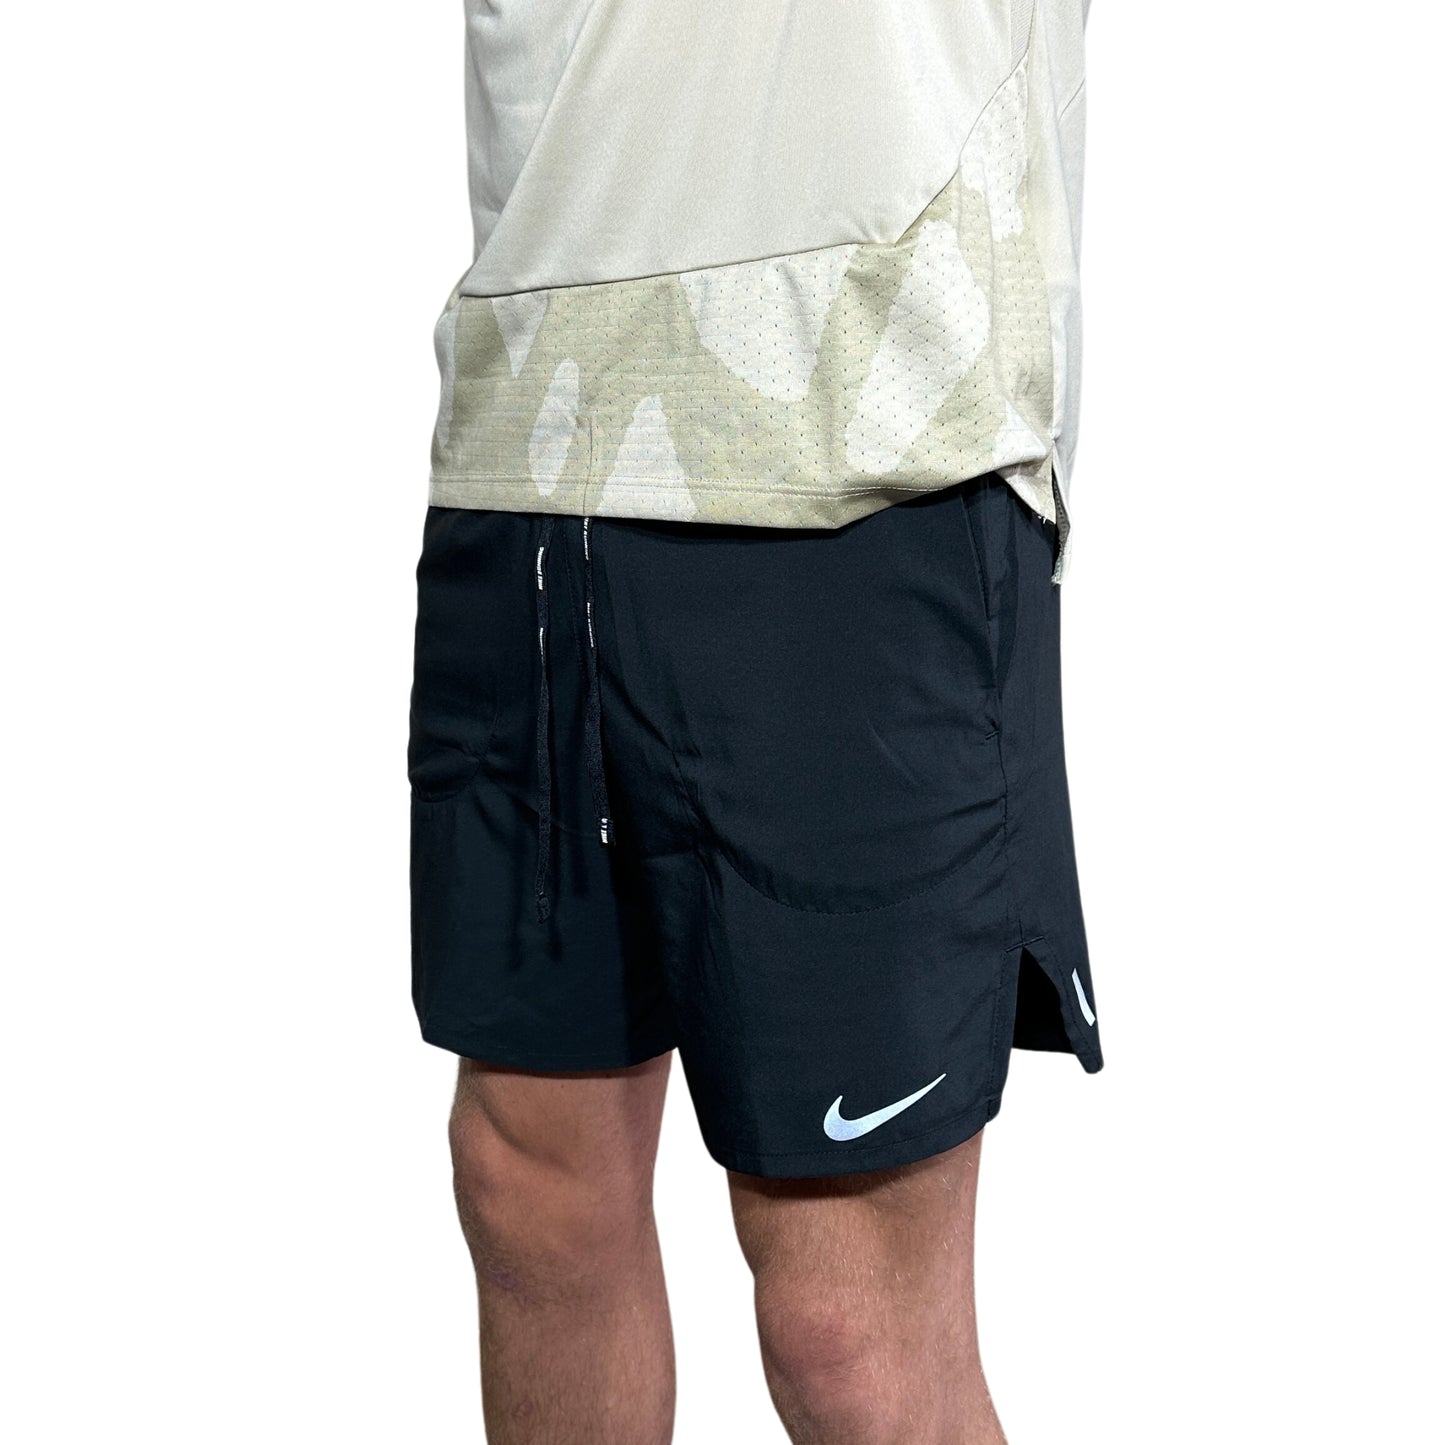 Nike Flex Stride 7in Shorts (Horizontal Tick)- Black